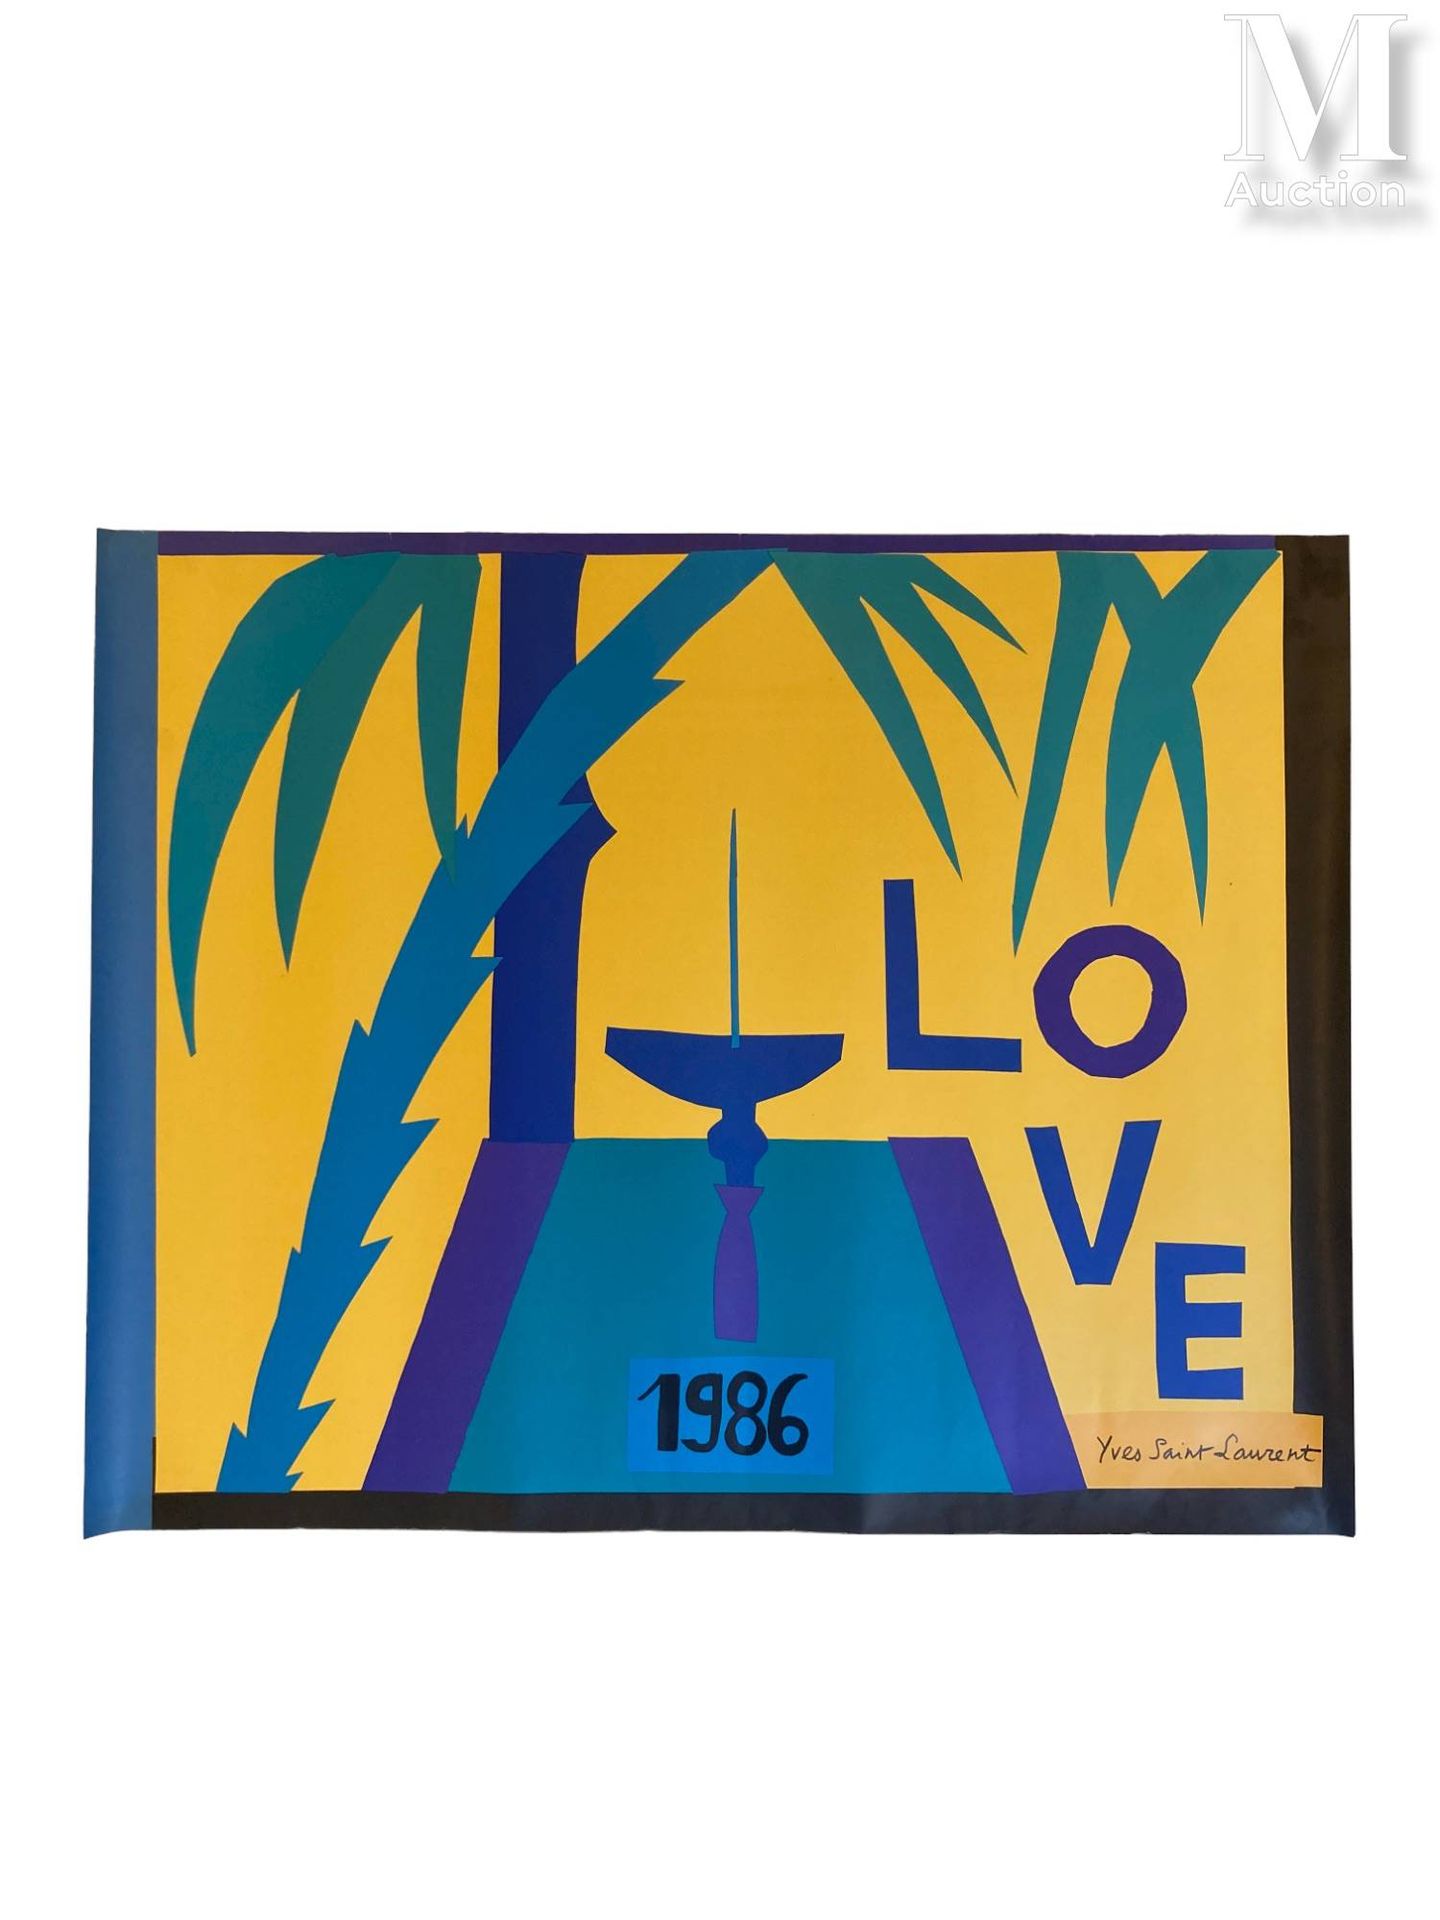 YVES SAINT LAURENT - 1986 Poster "Amore



stampa su carta 

68 x 54 cm